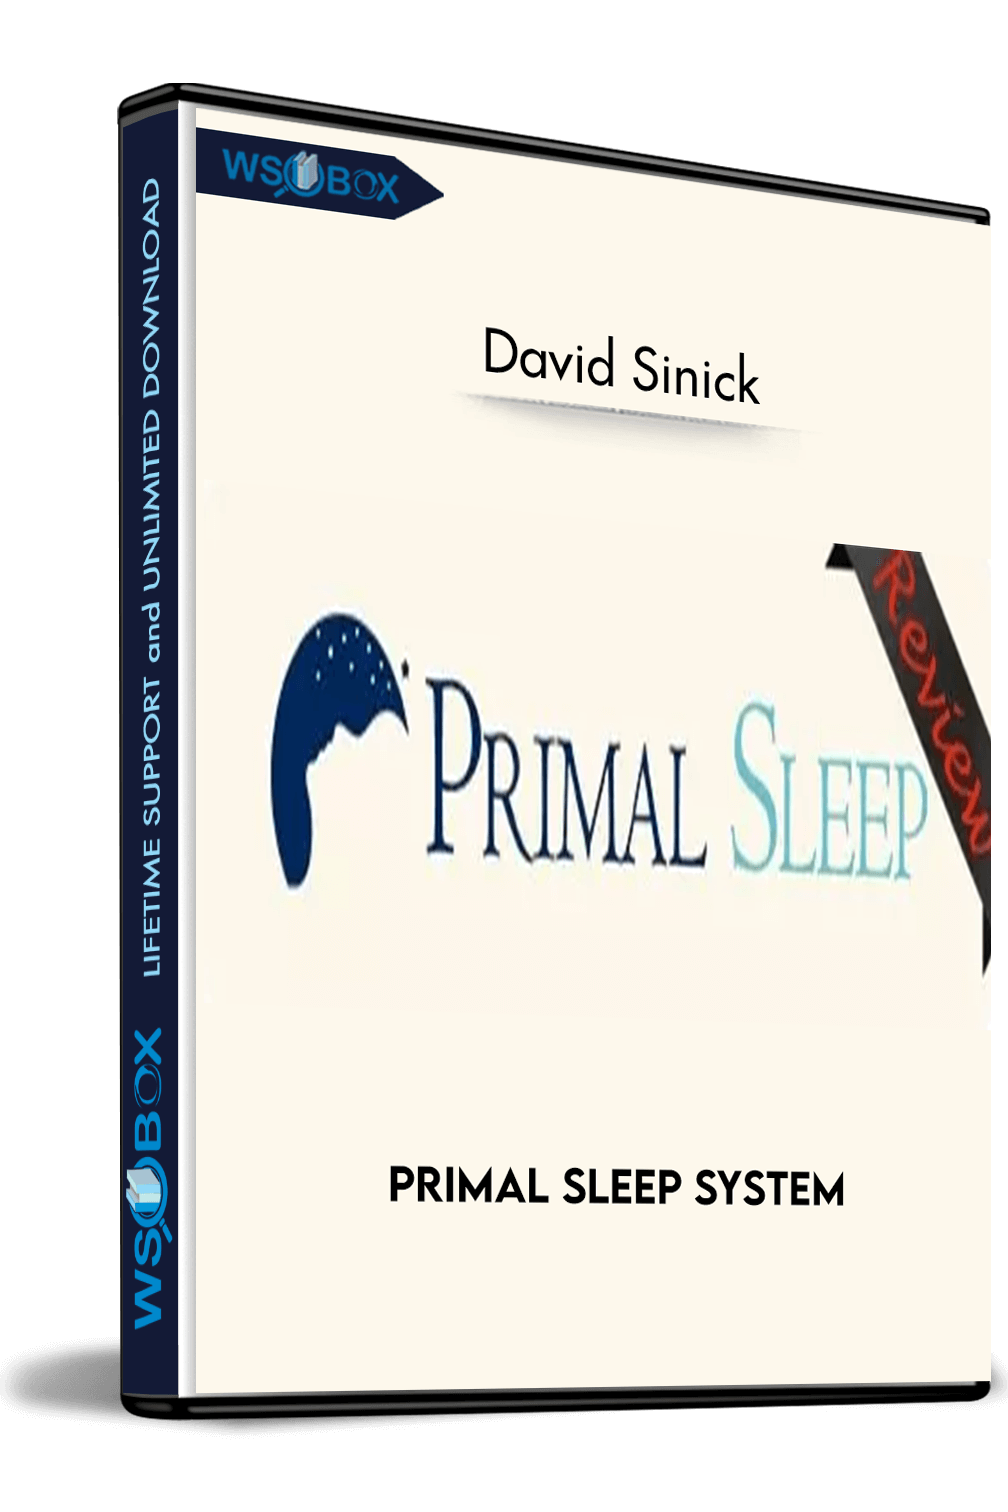 Primal Sleep System – David Sinick